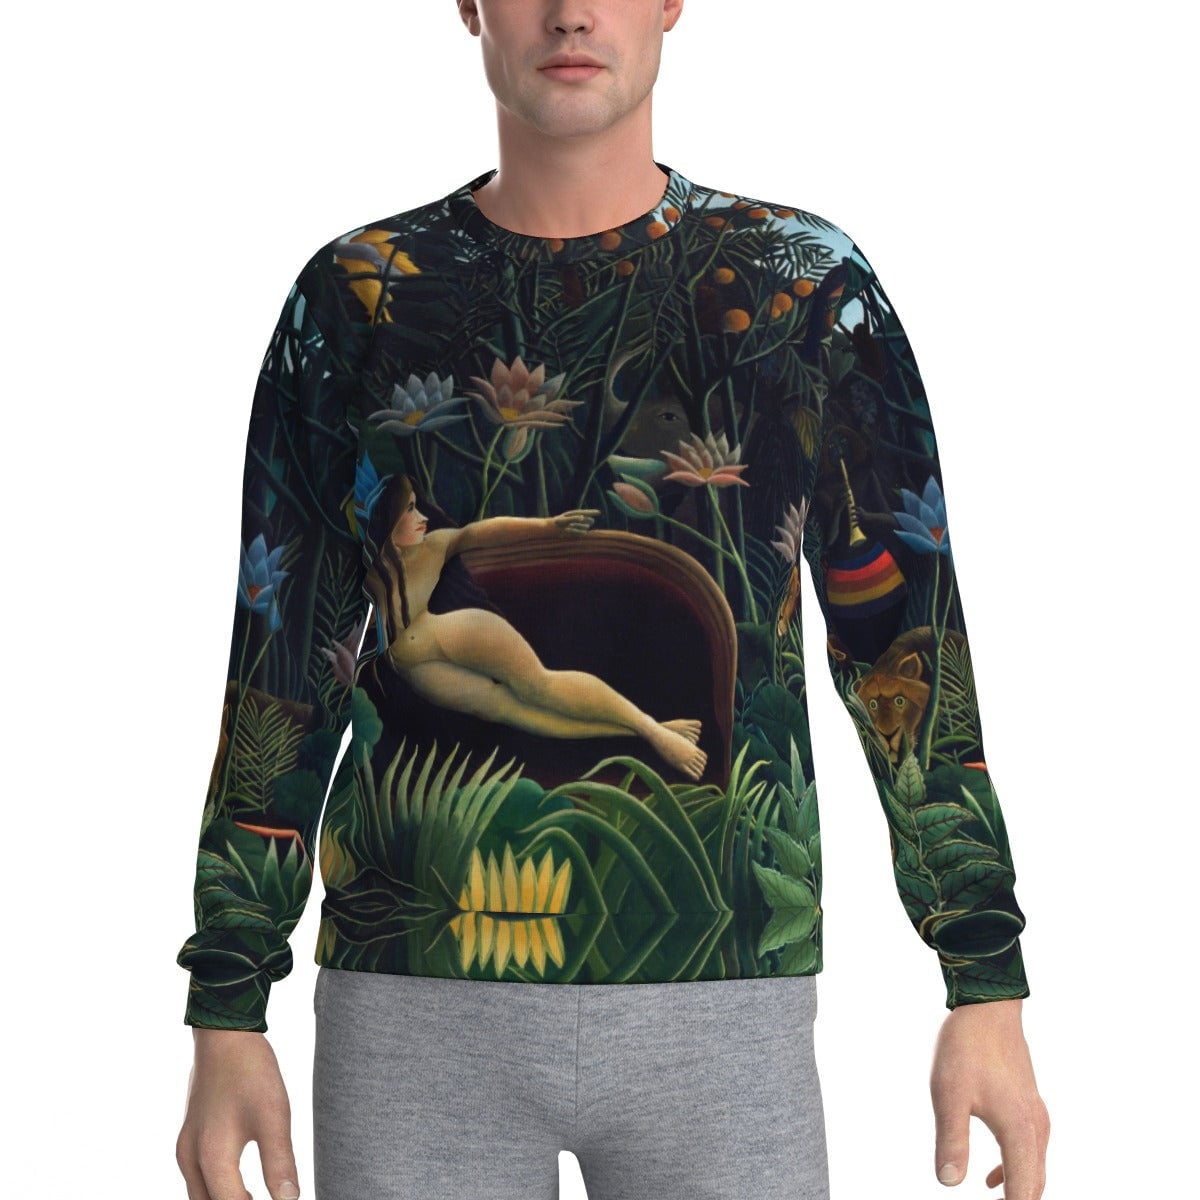 Henri Rousseau’s The Dream Art Sweatshirt